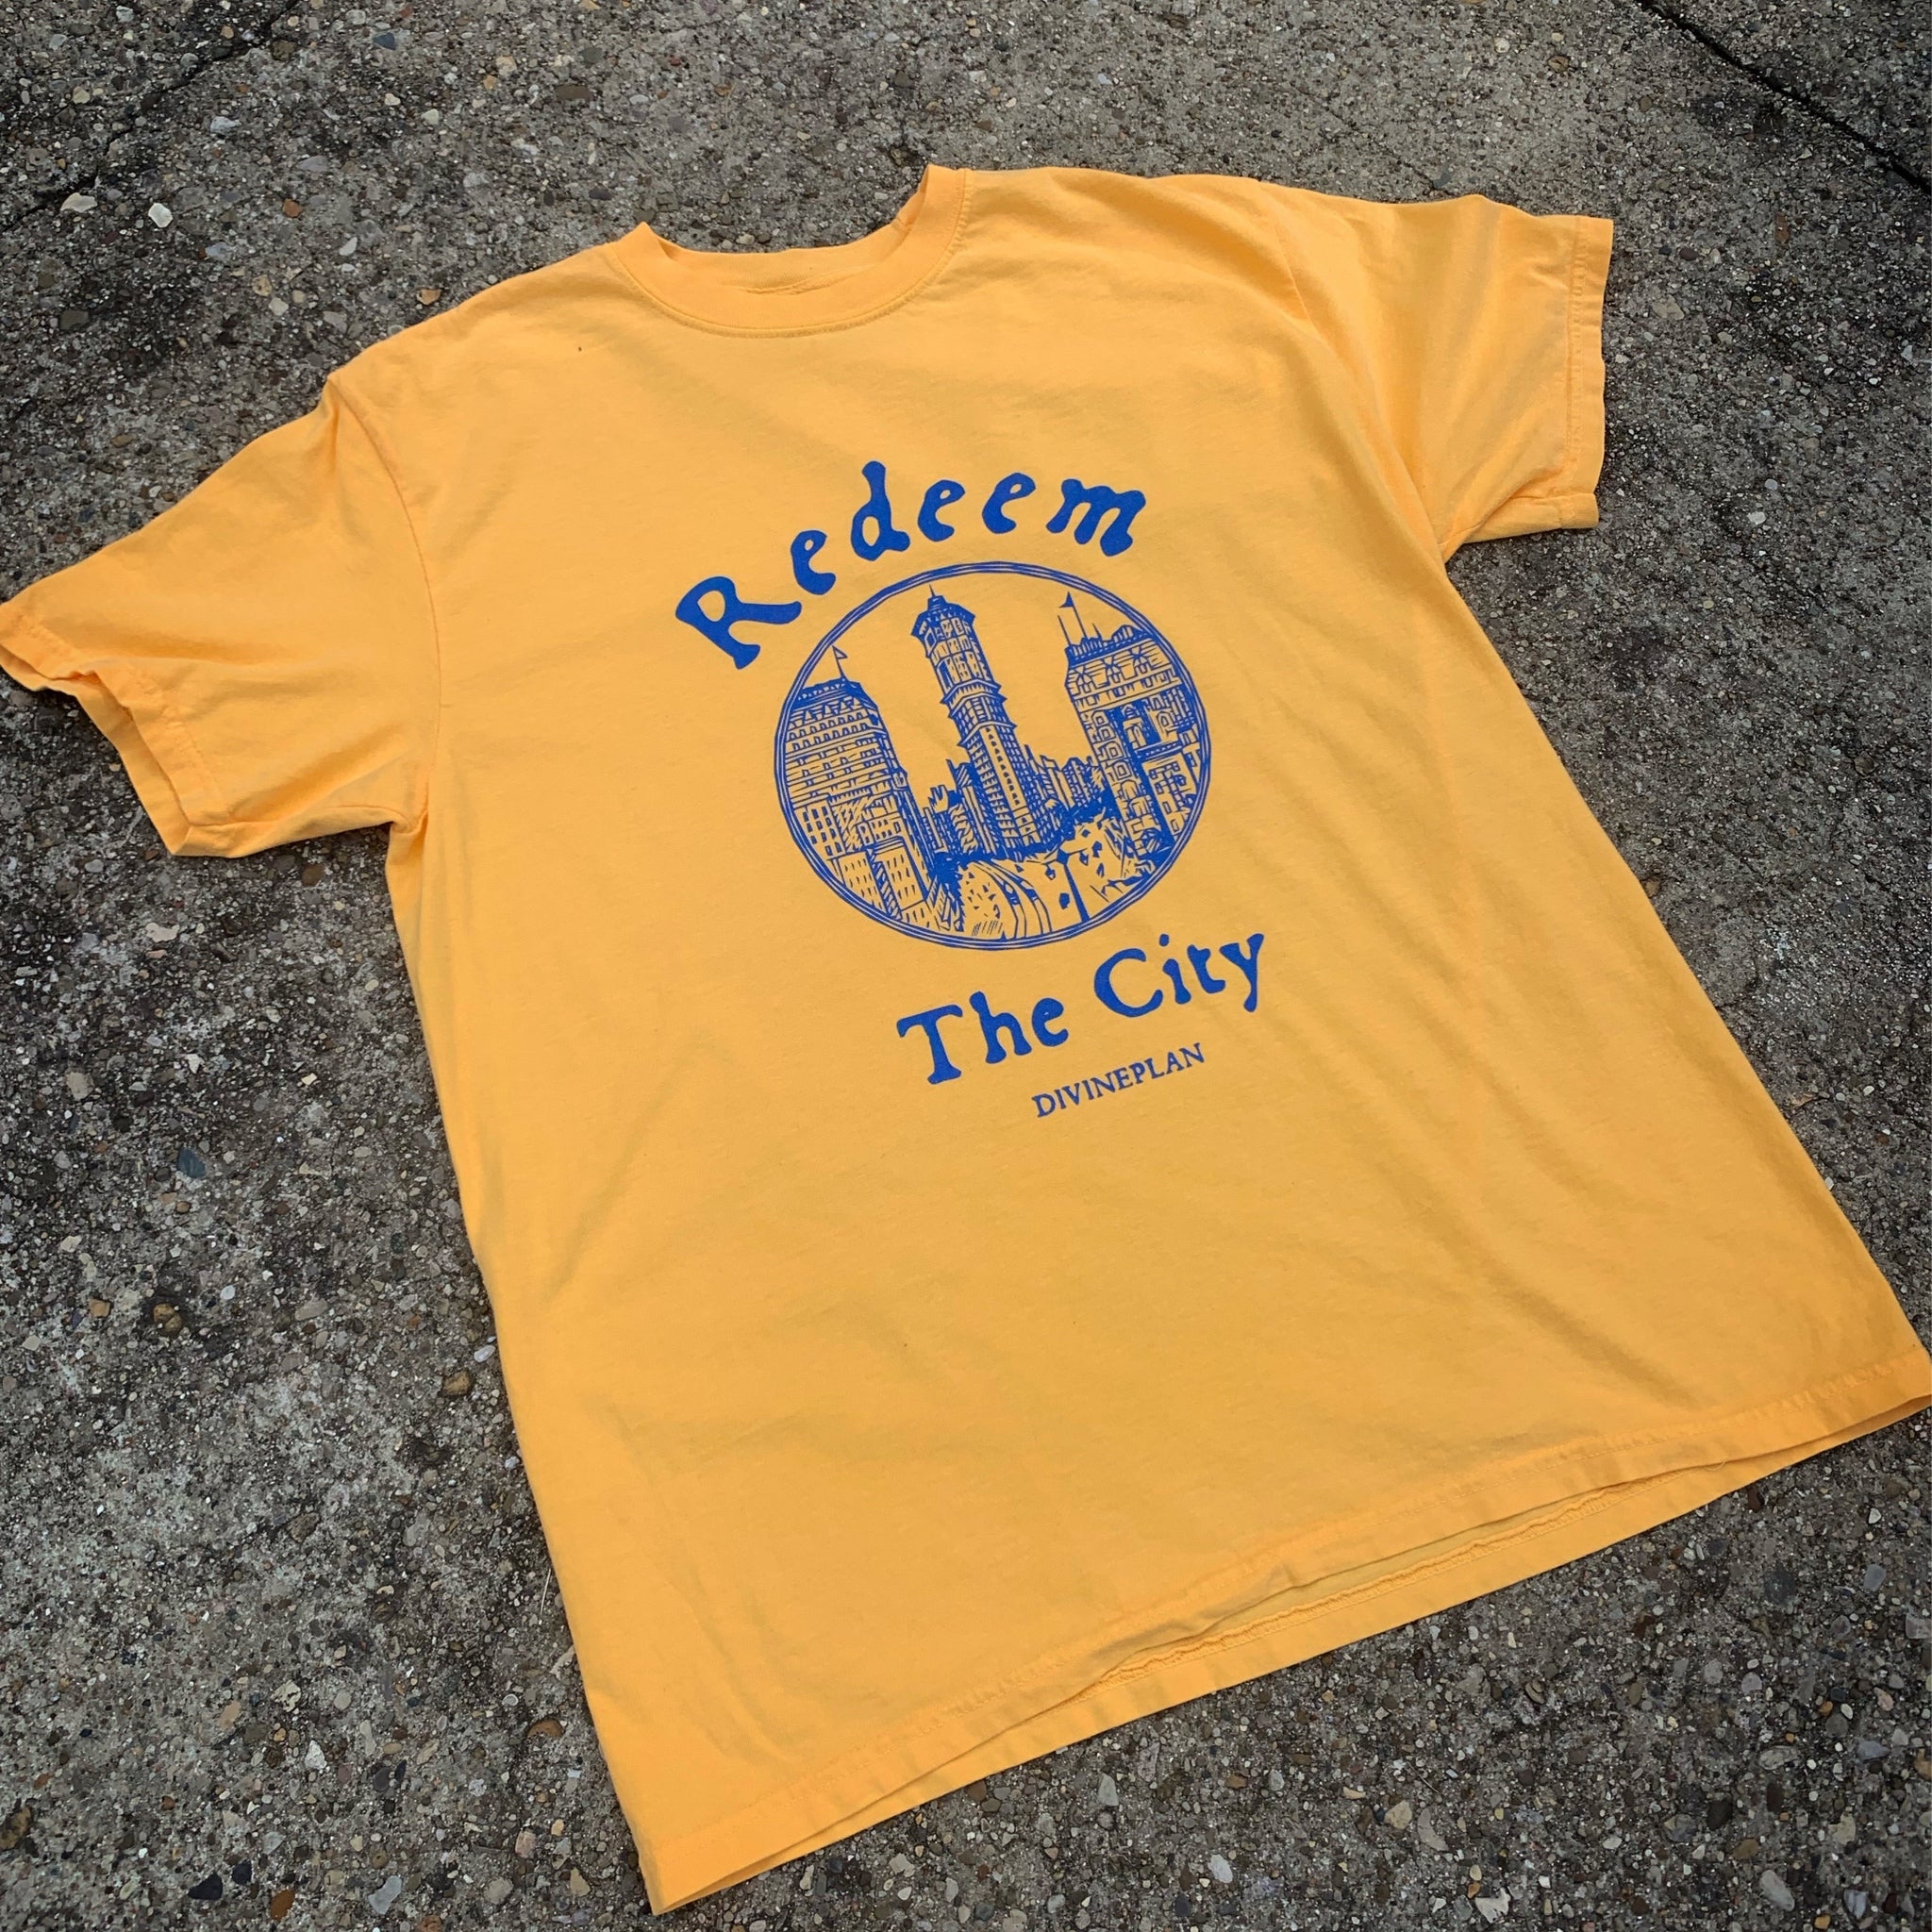 "REDEEM THE CITY" T-shirt...